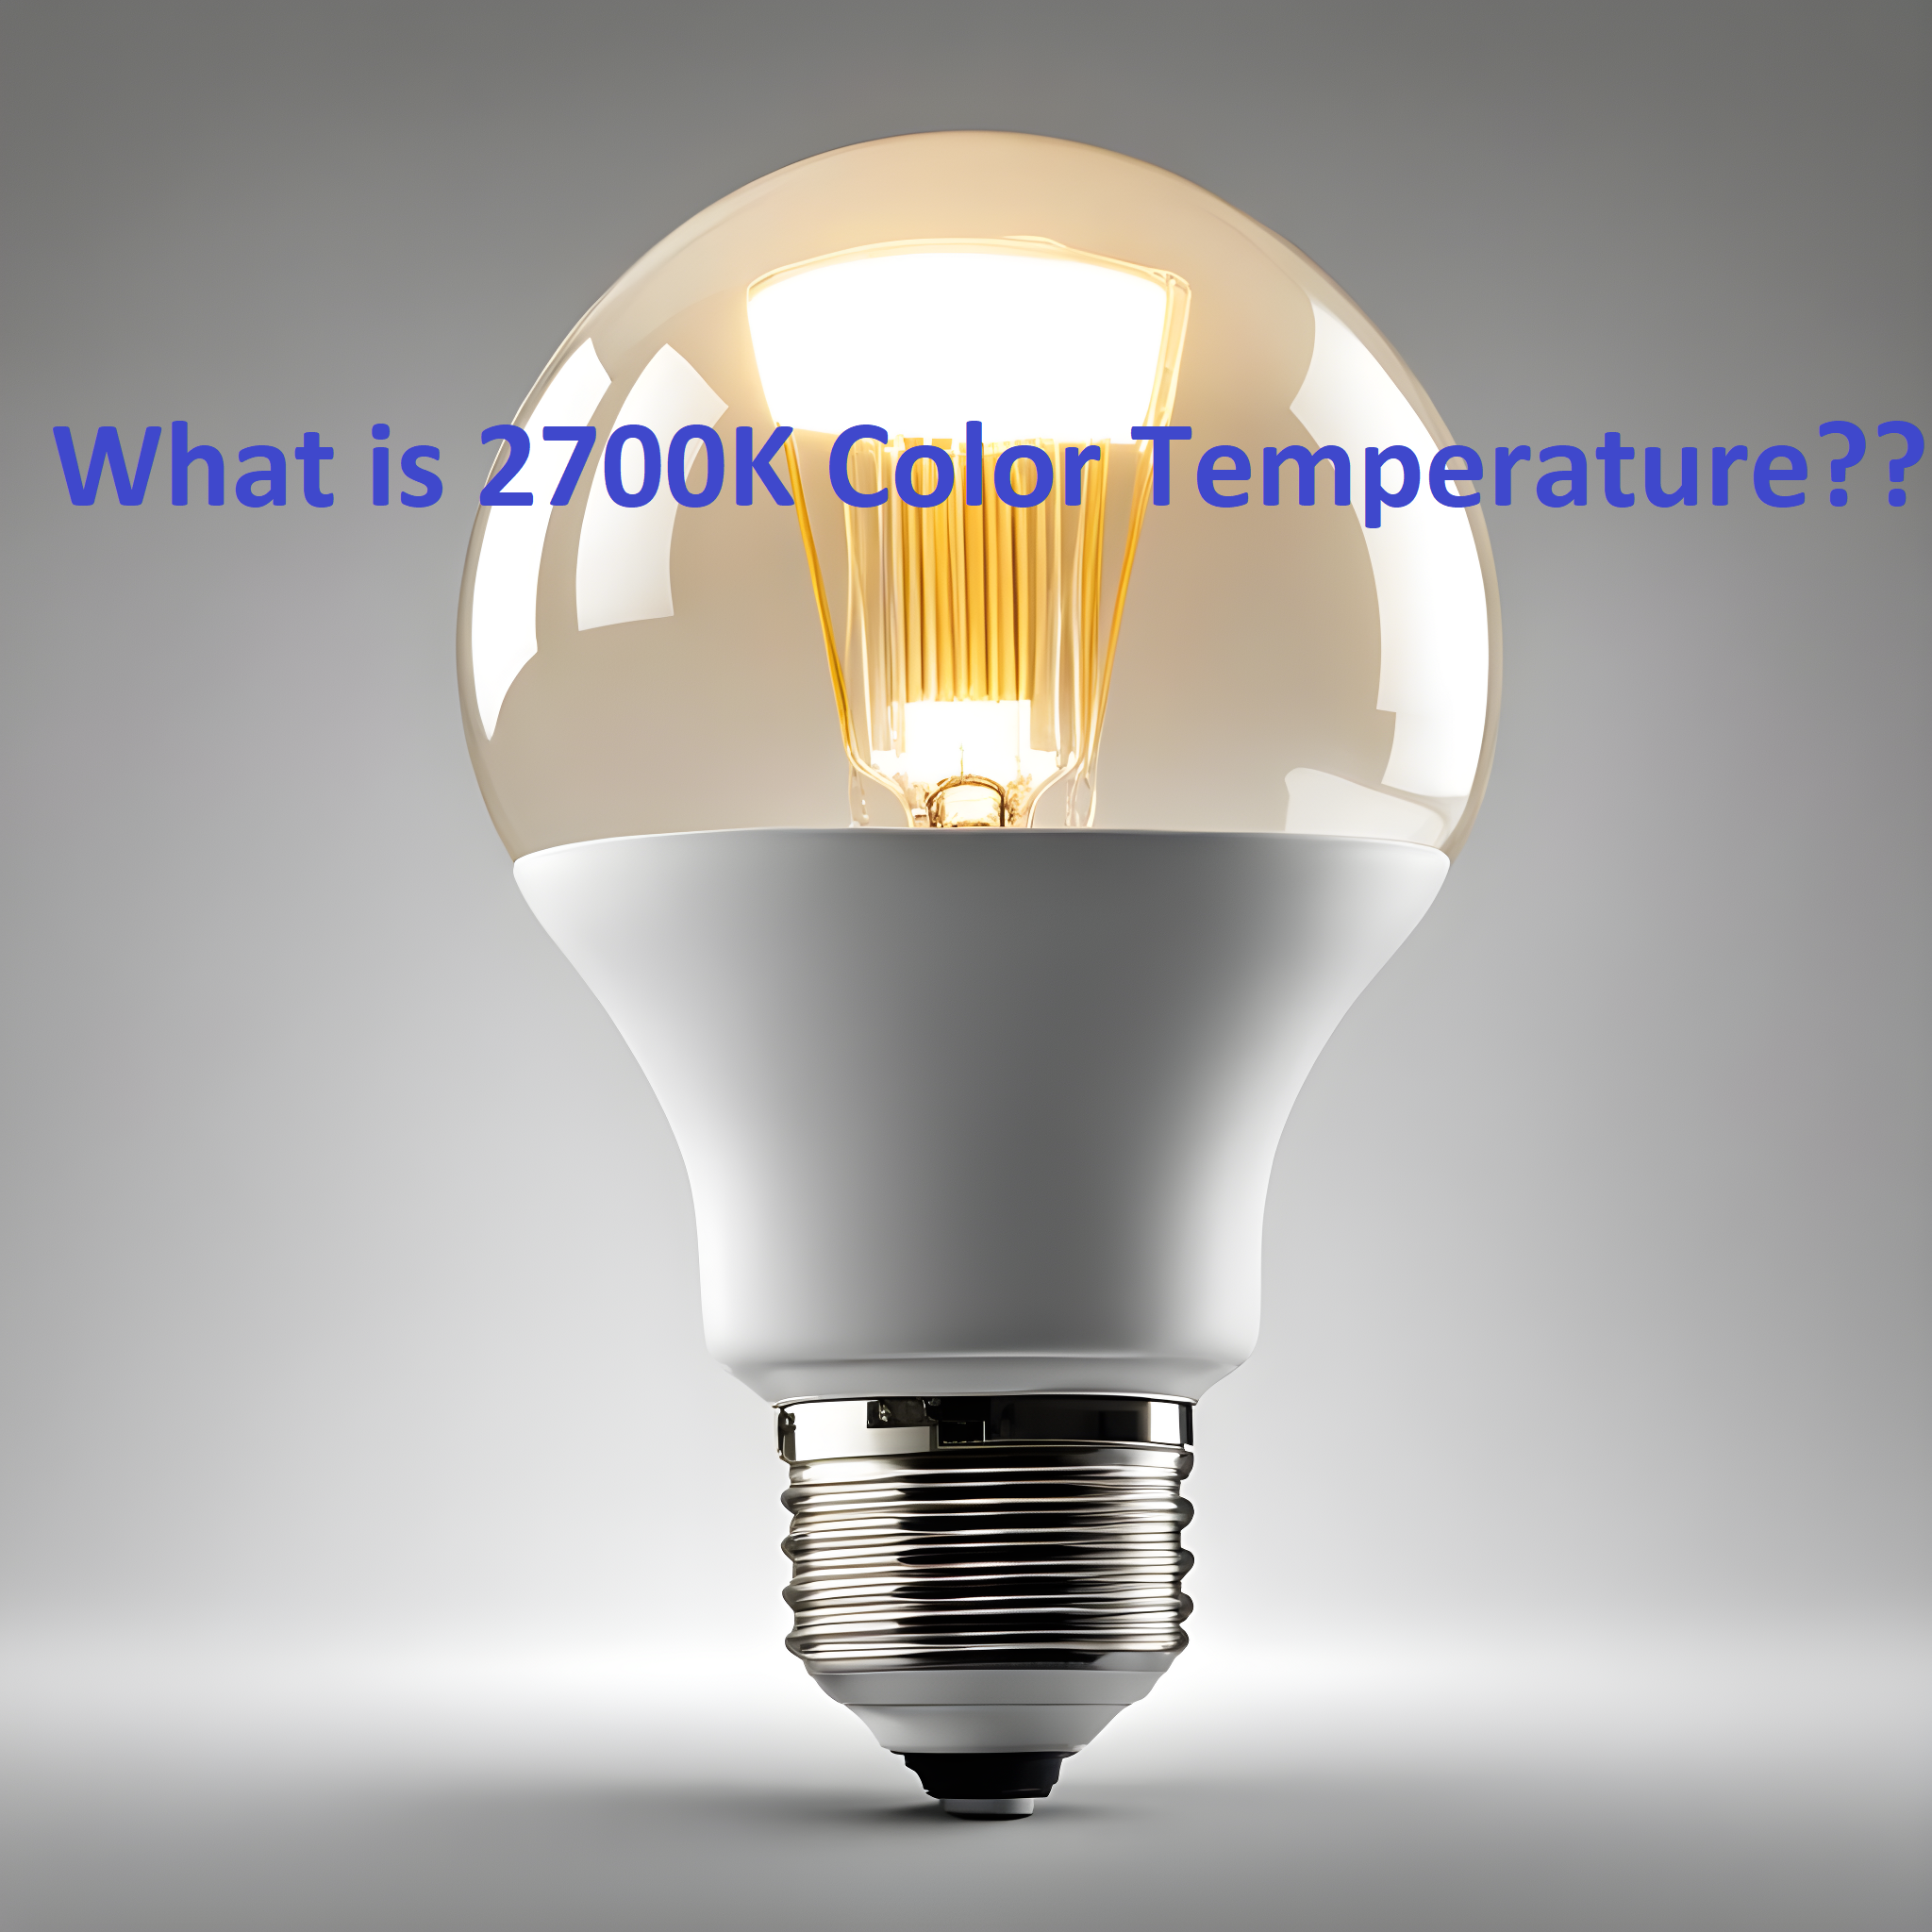 2700K Color Temperature